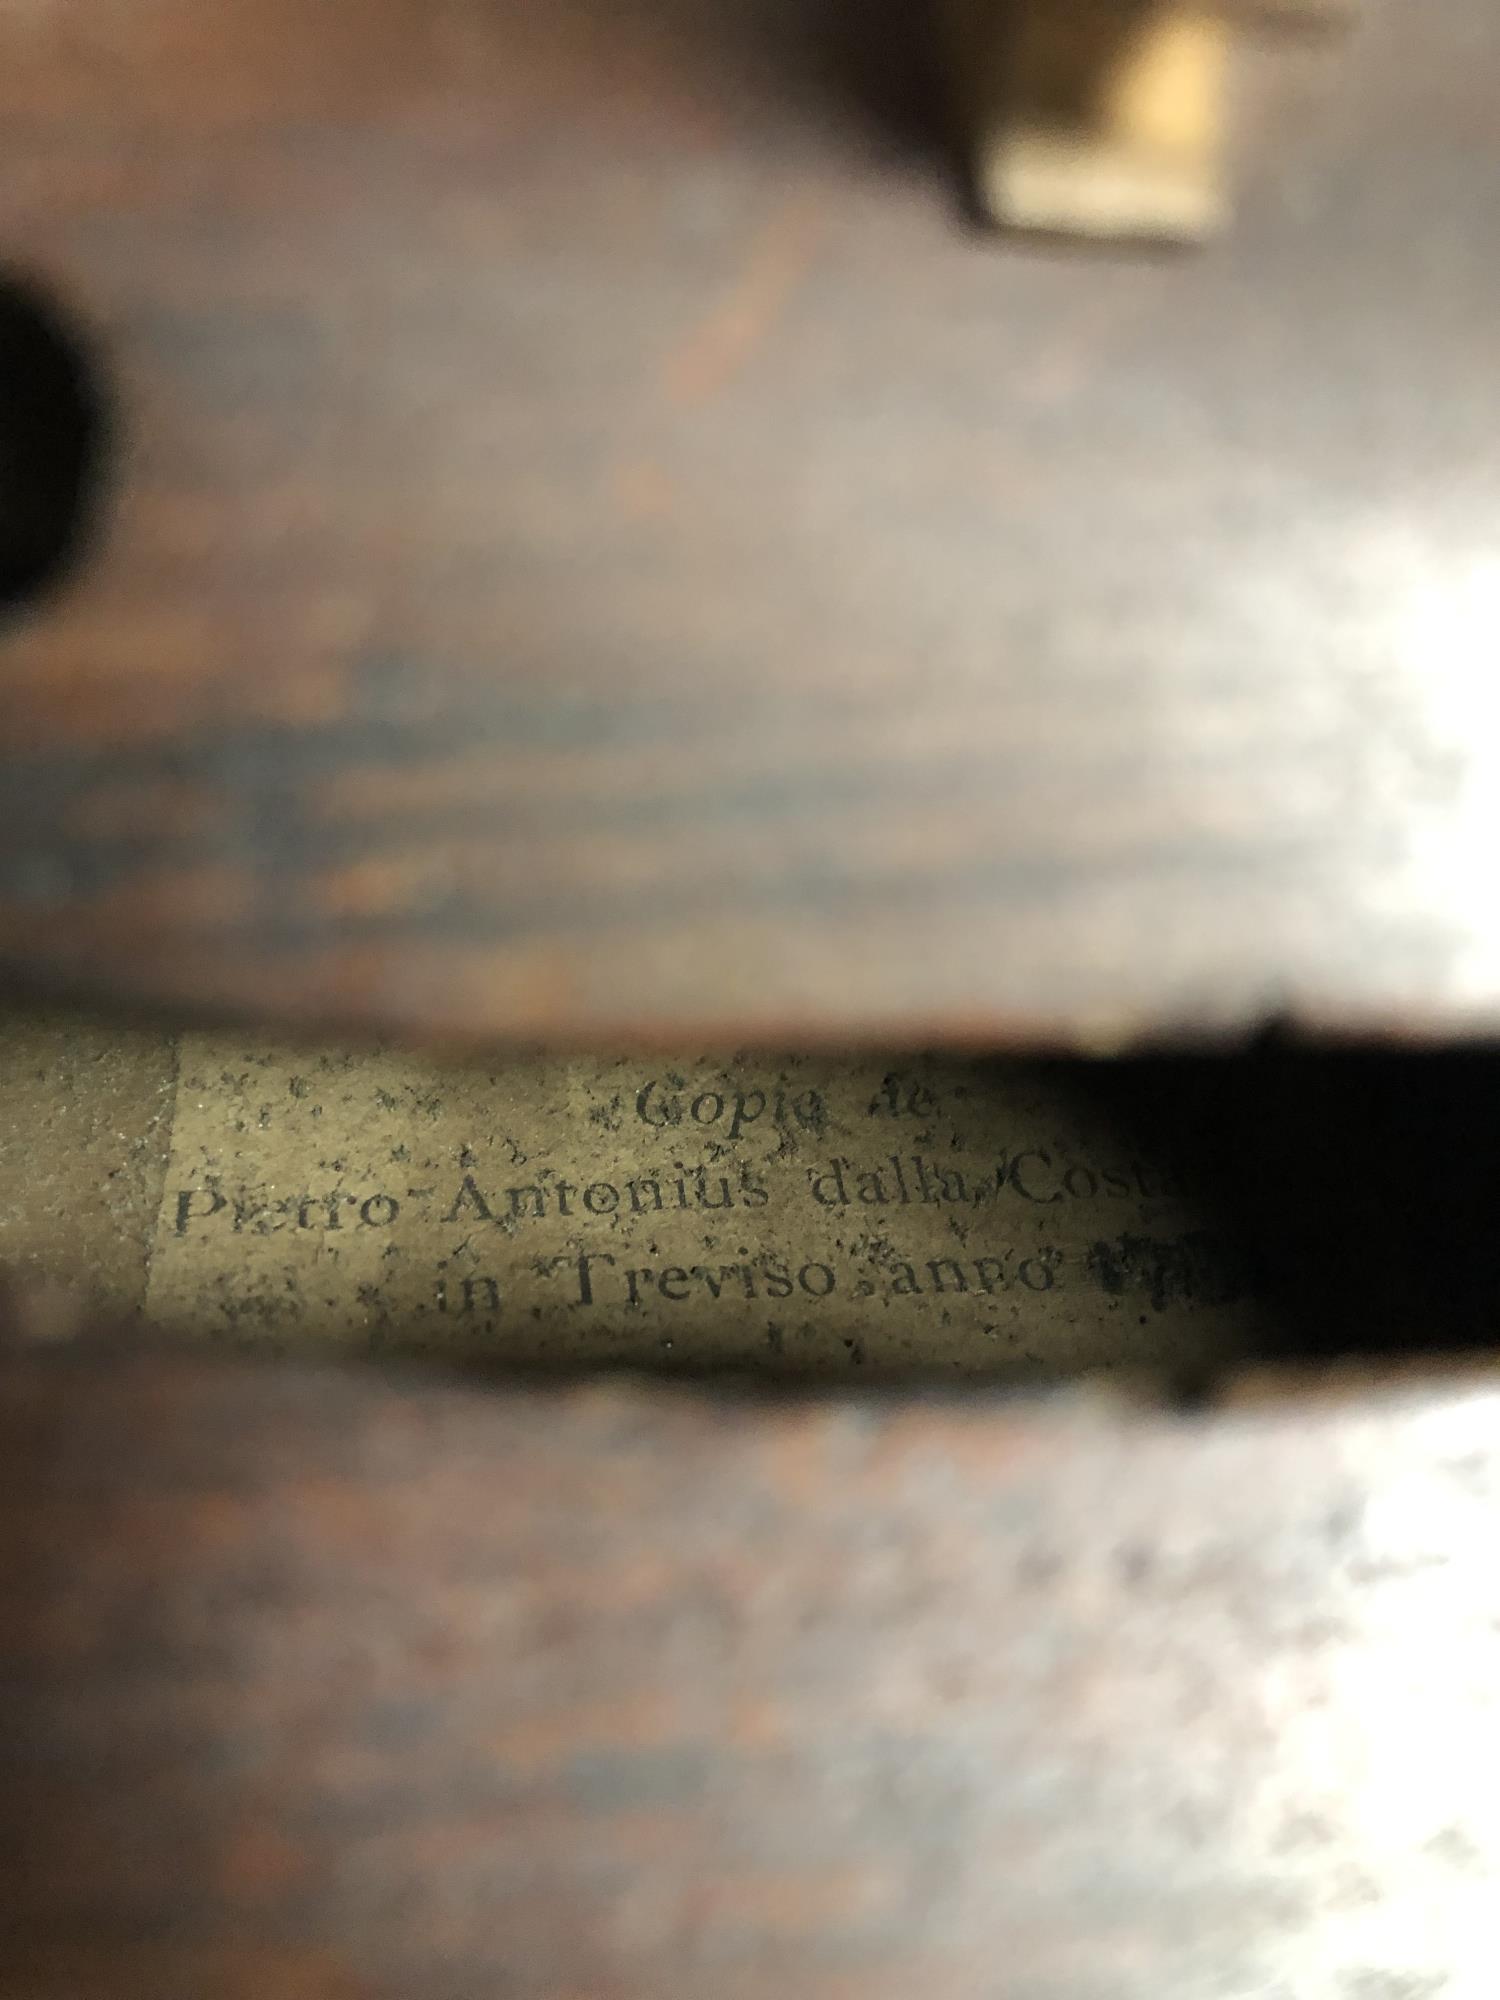 An antique violin, a copy of Pietro Antonius Dalla Costa, with internal label dated 1782, - Image 12 of 18